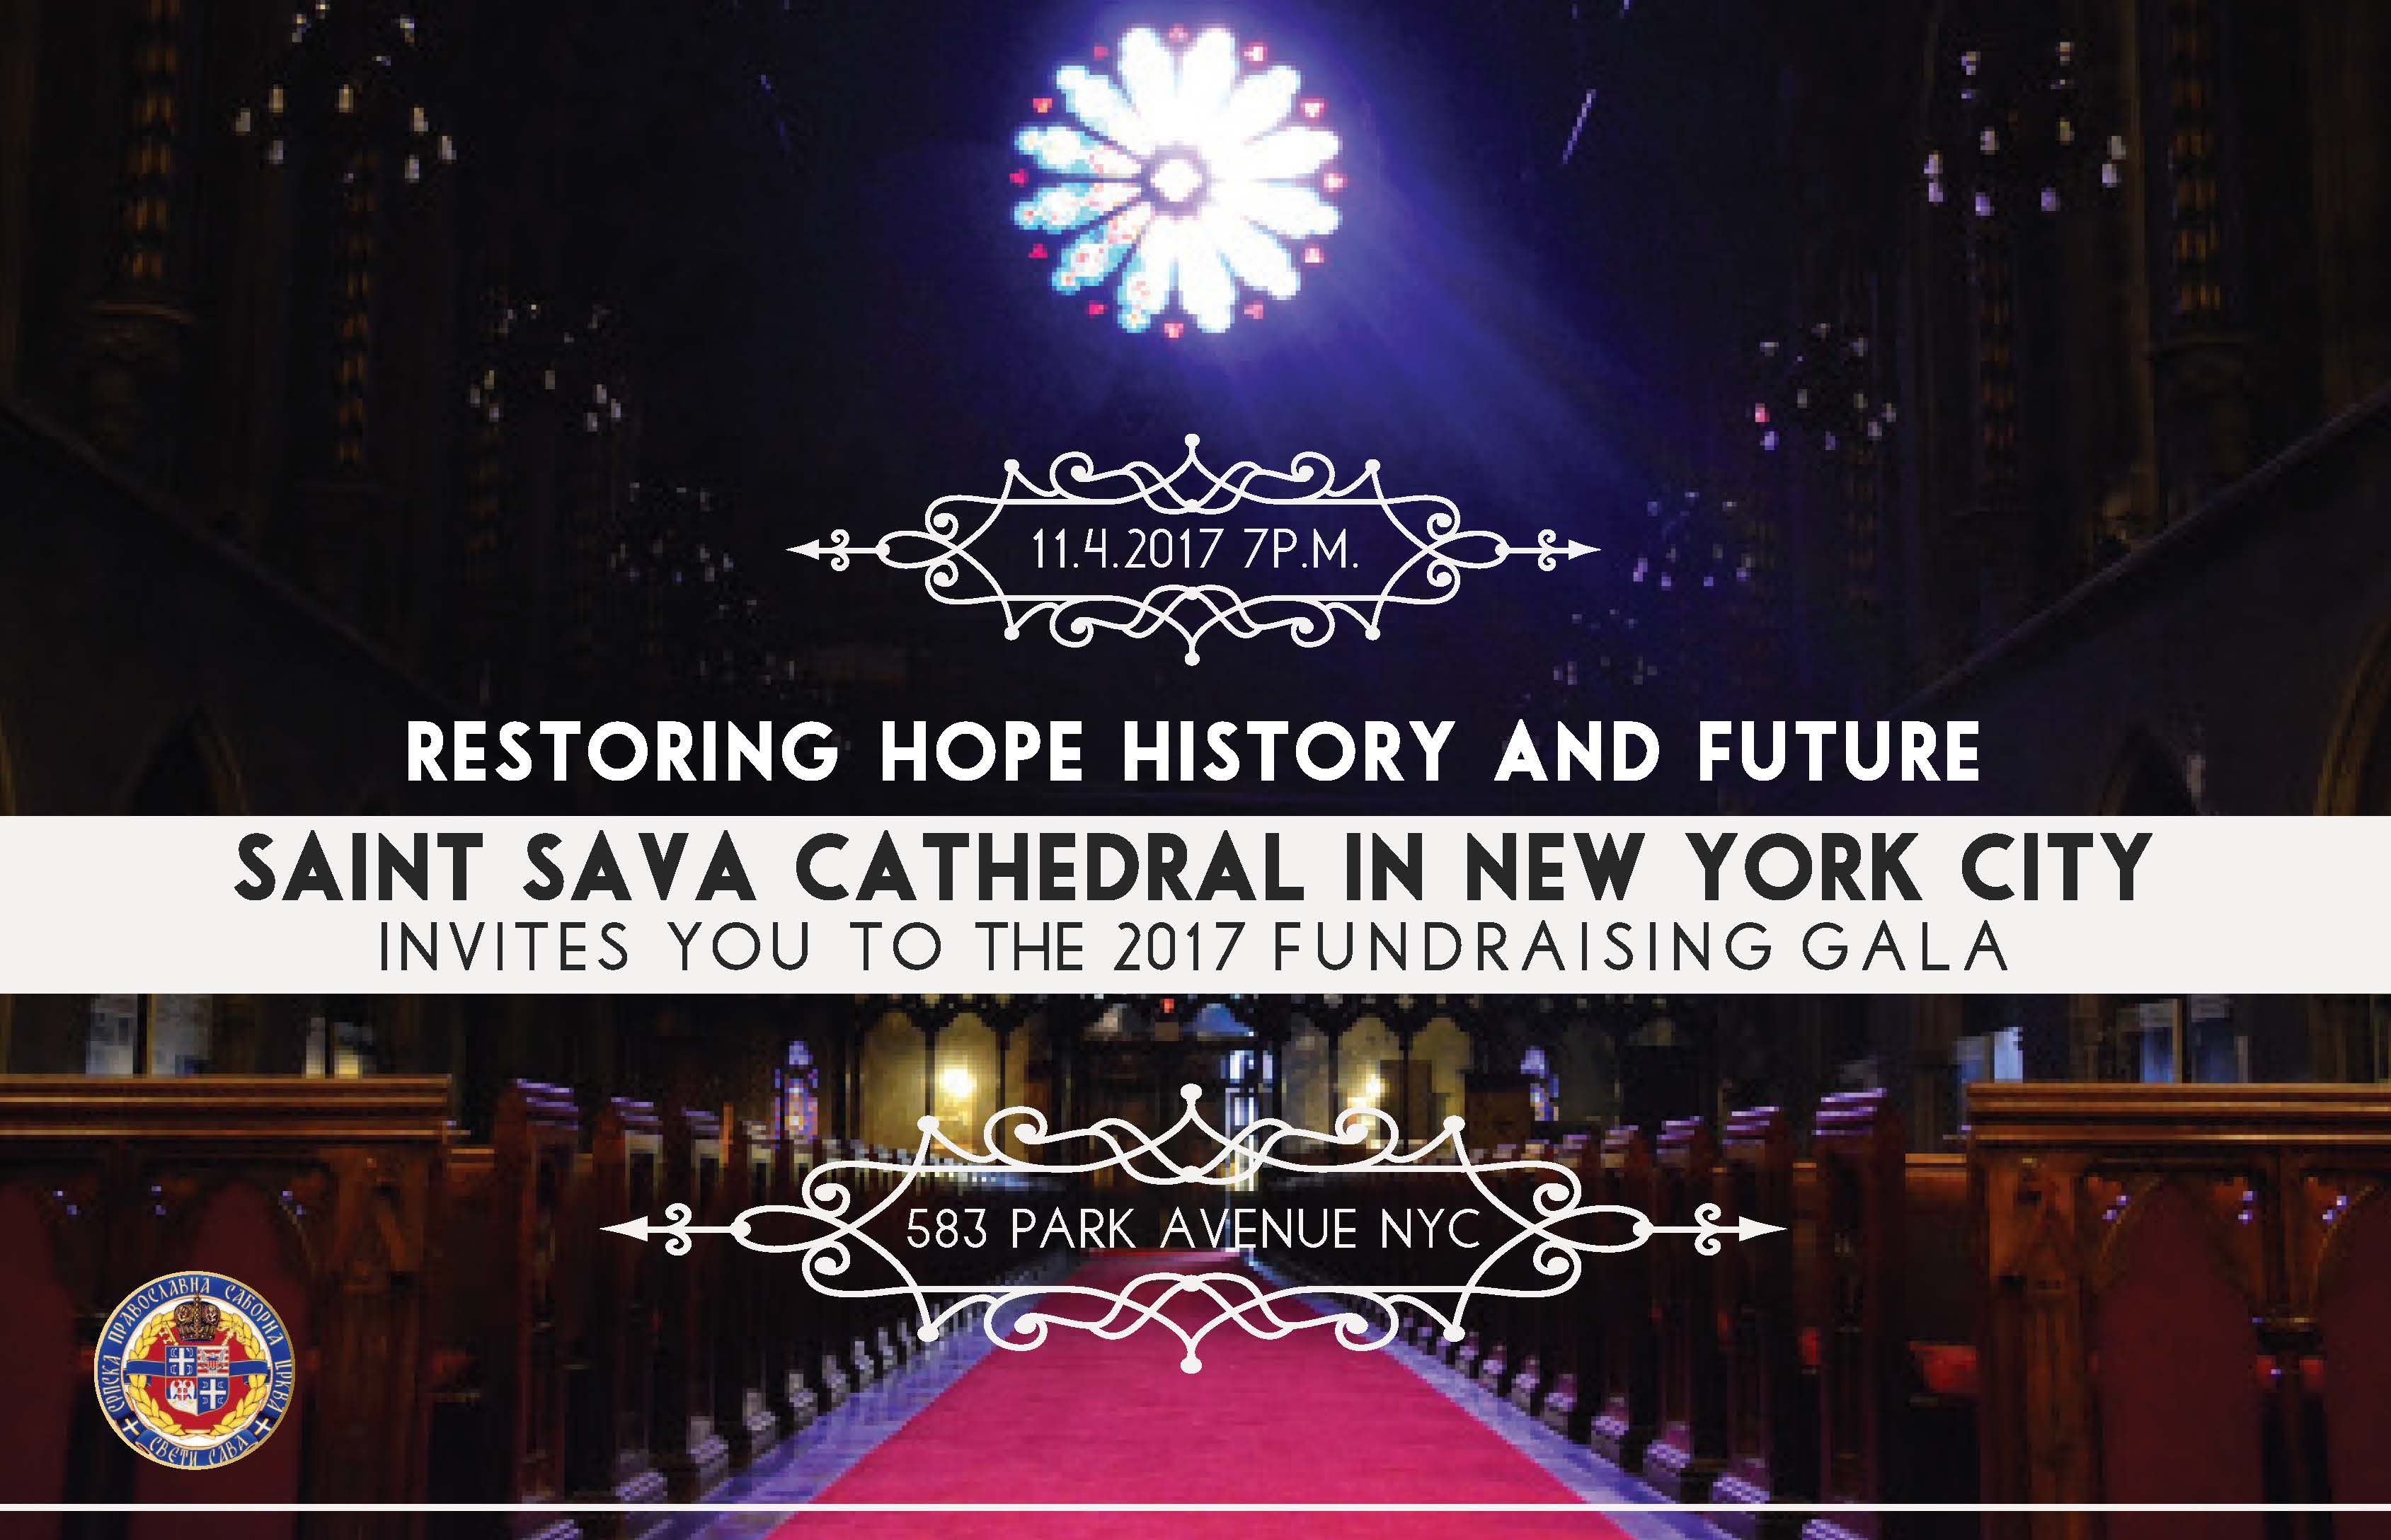 Saint Sava NYC Annual Fundraising Gala – November 4, 2017 at 583 Park Avenue in New York City